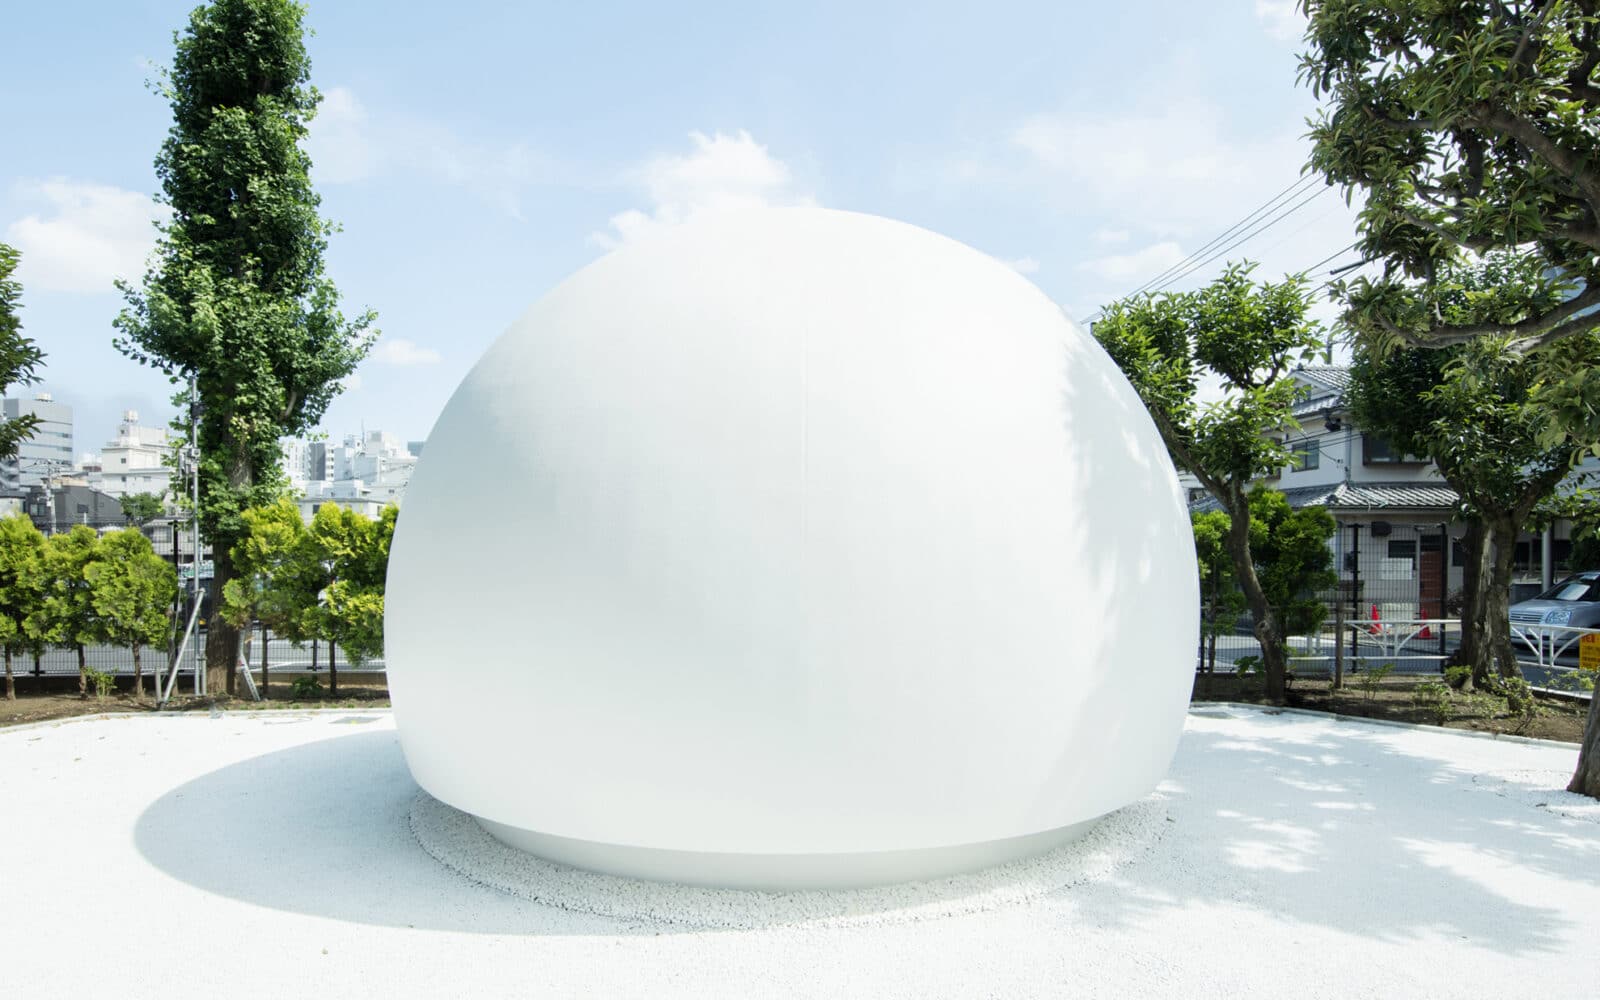 Shibuya City Branding: “The Tokyo Toilet” Project